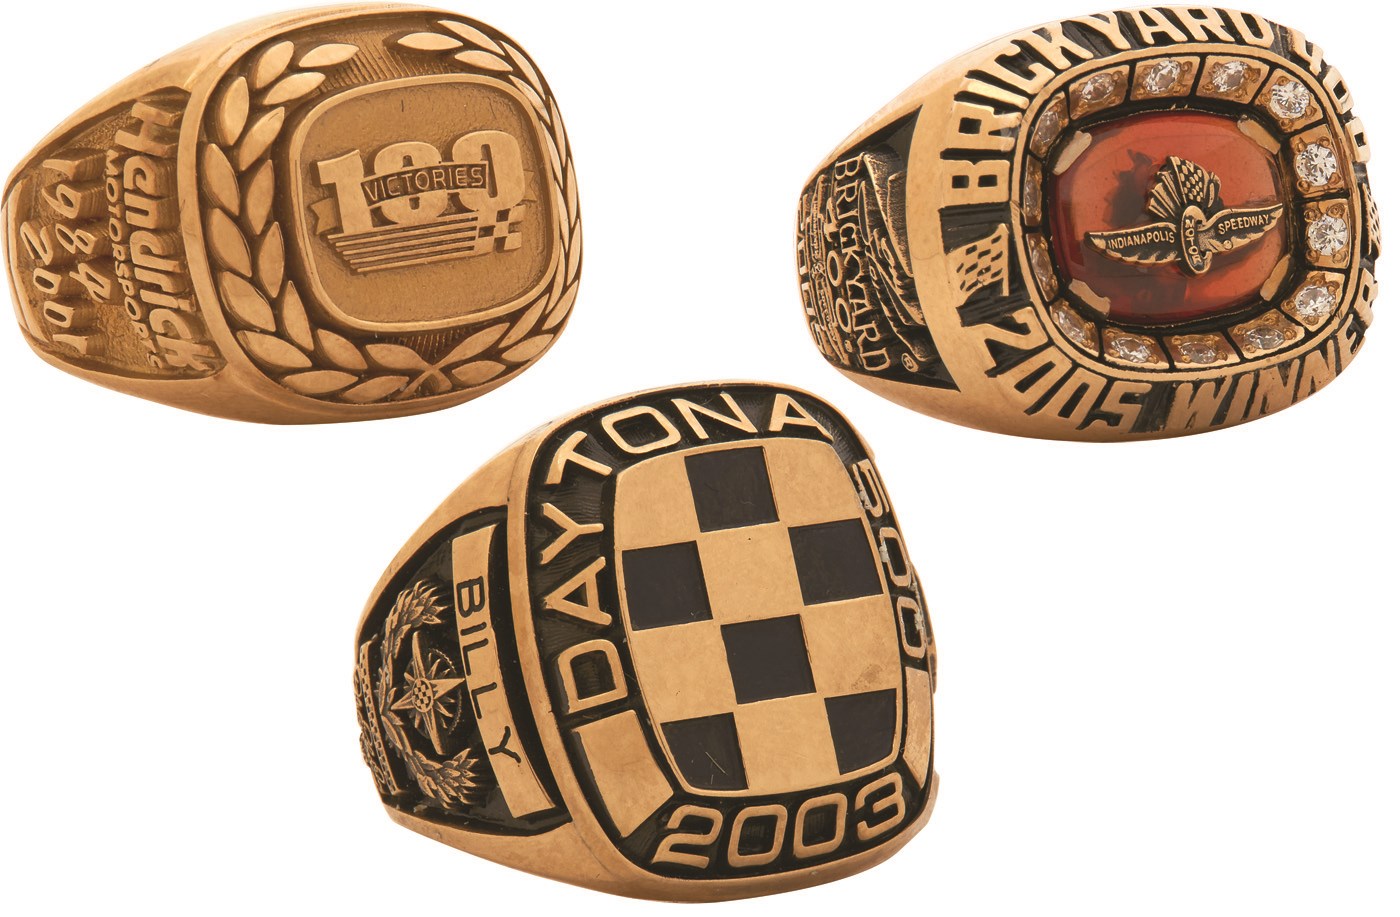 - Nascar 10k Gold Championship Rings with Daytona 500 (All PSA)